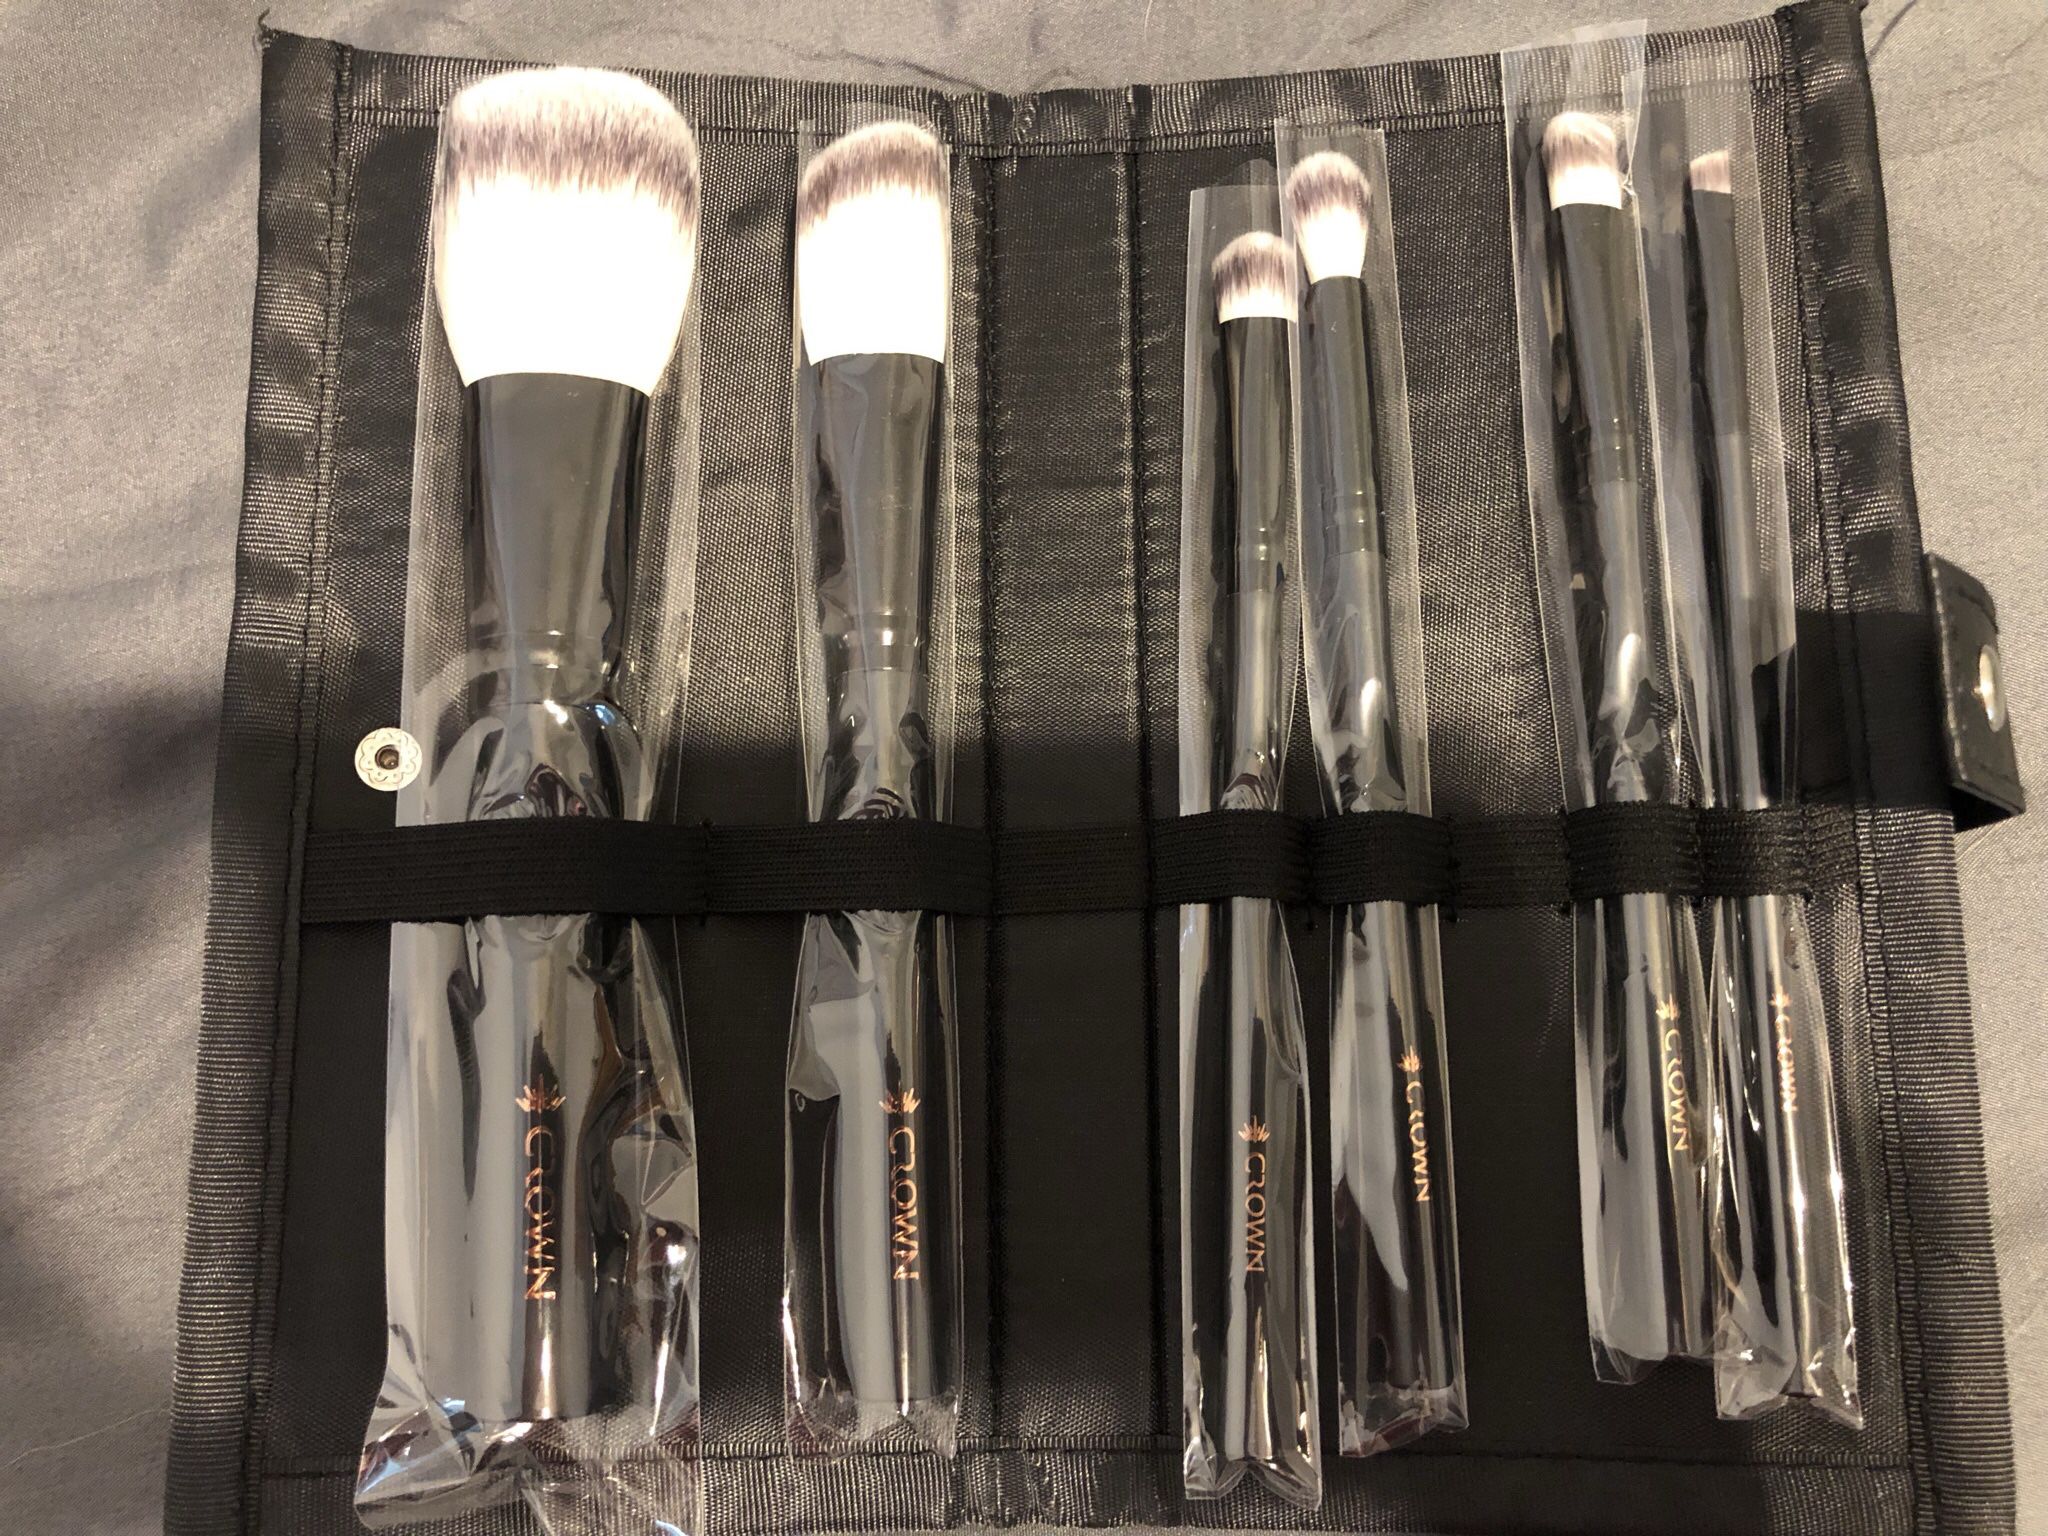 Crown Pro Face Set Of 6 Makeup Brushes